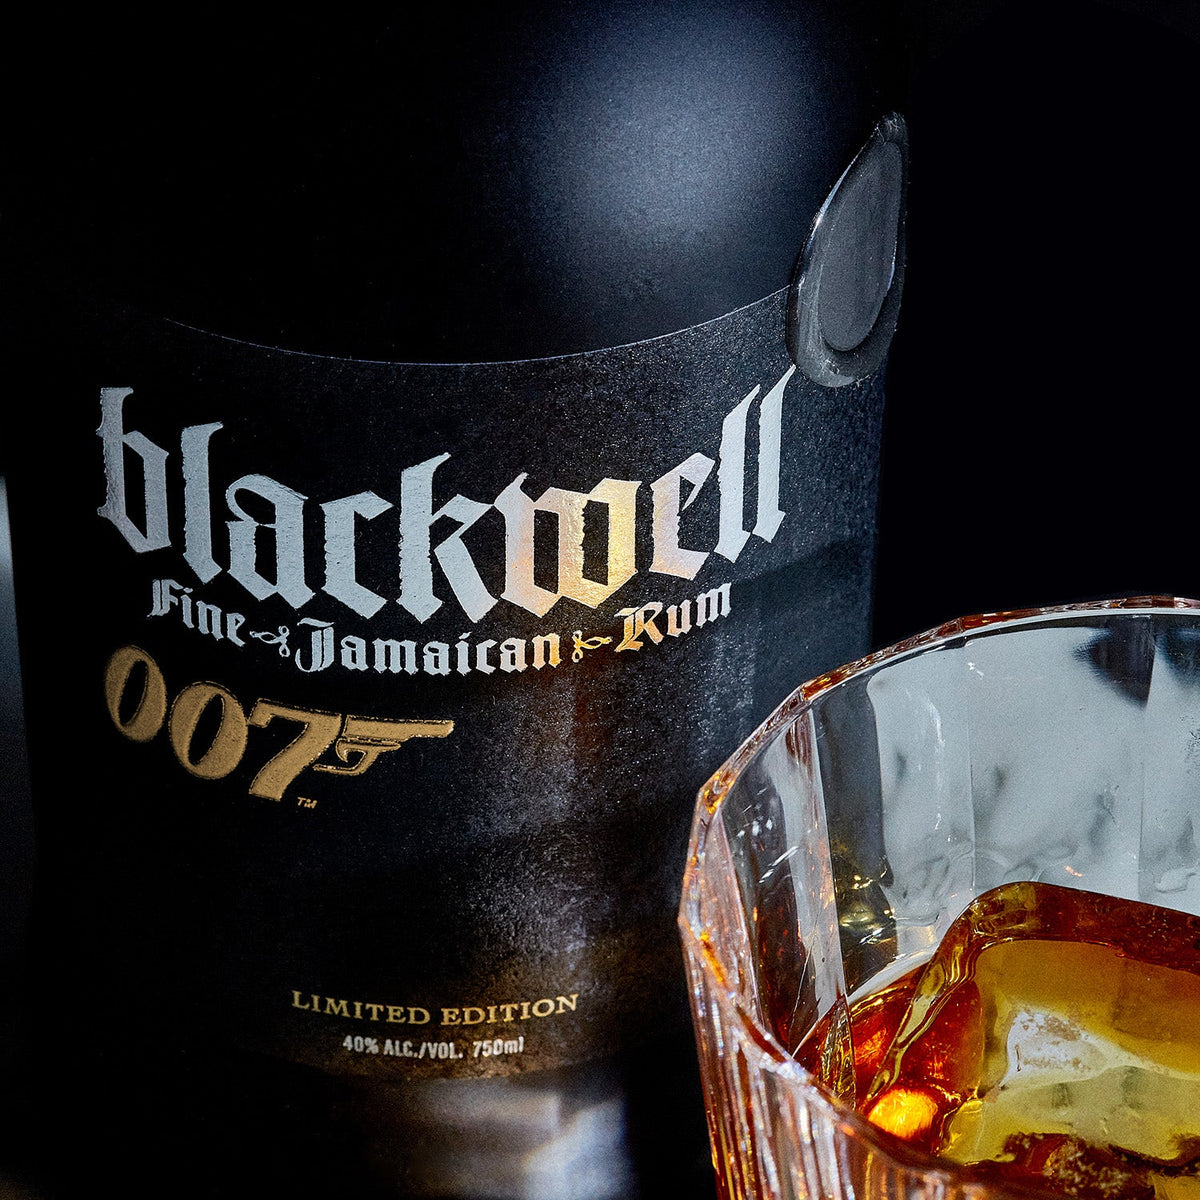 James Bond 007 Jamaican Rum - By Blackwell Rum (70cl)